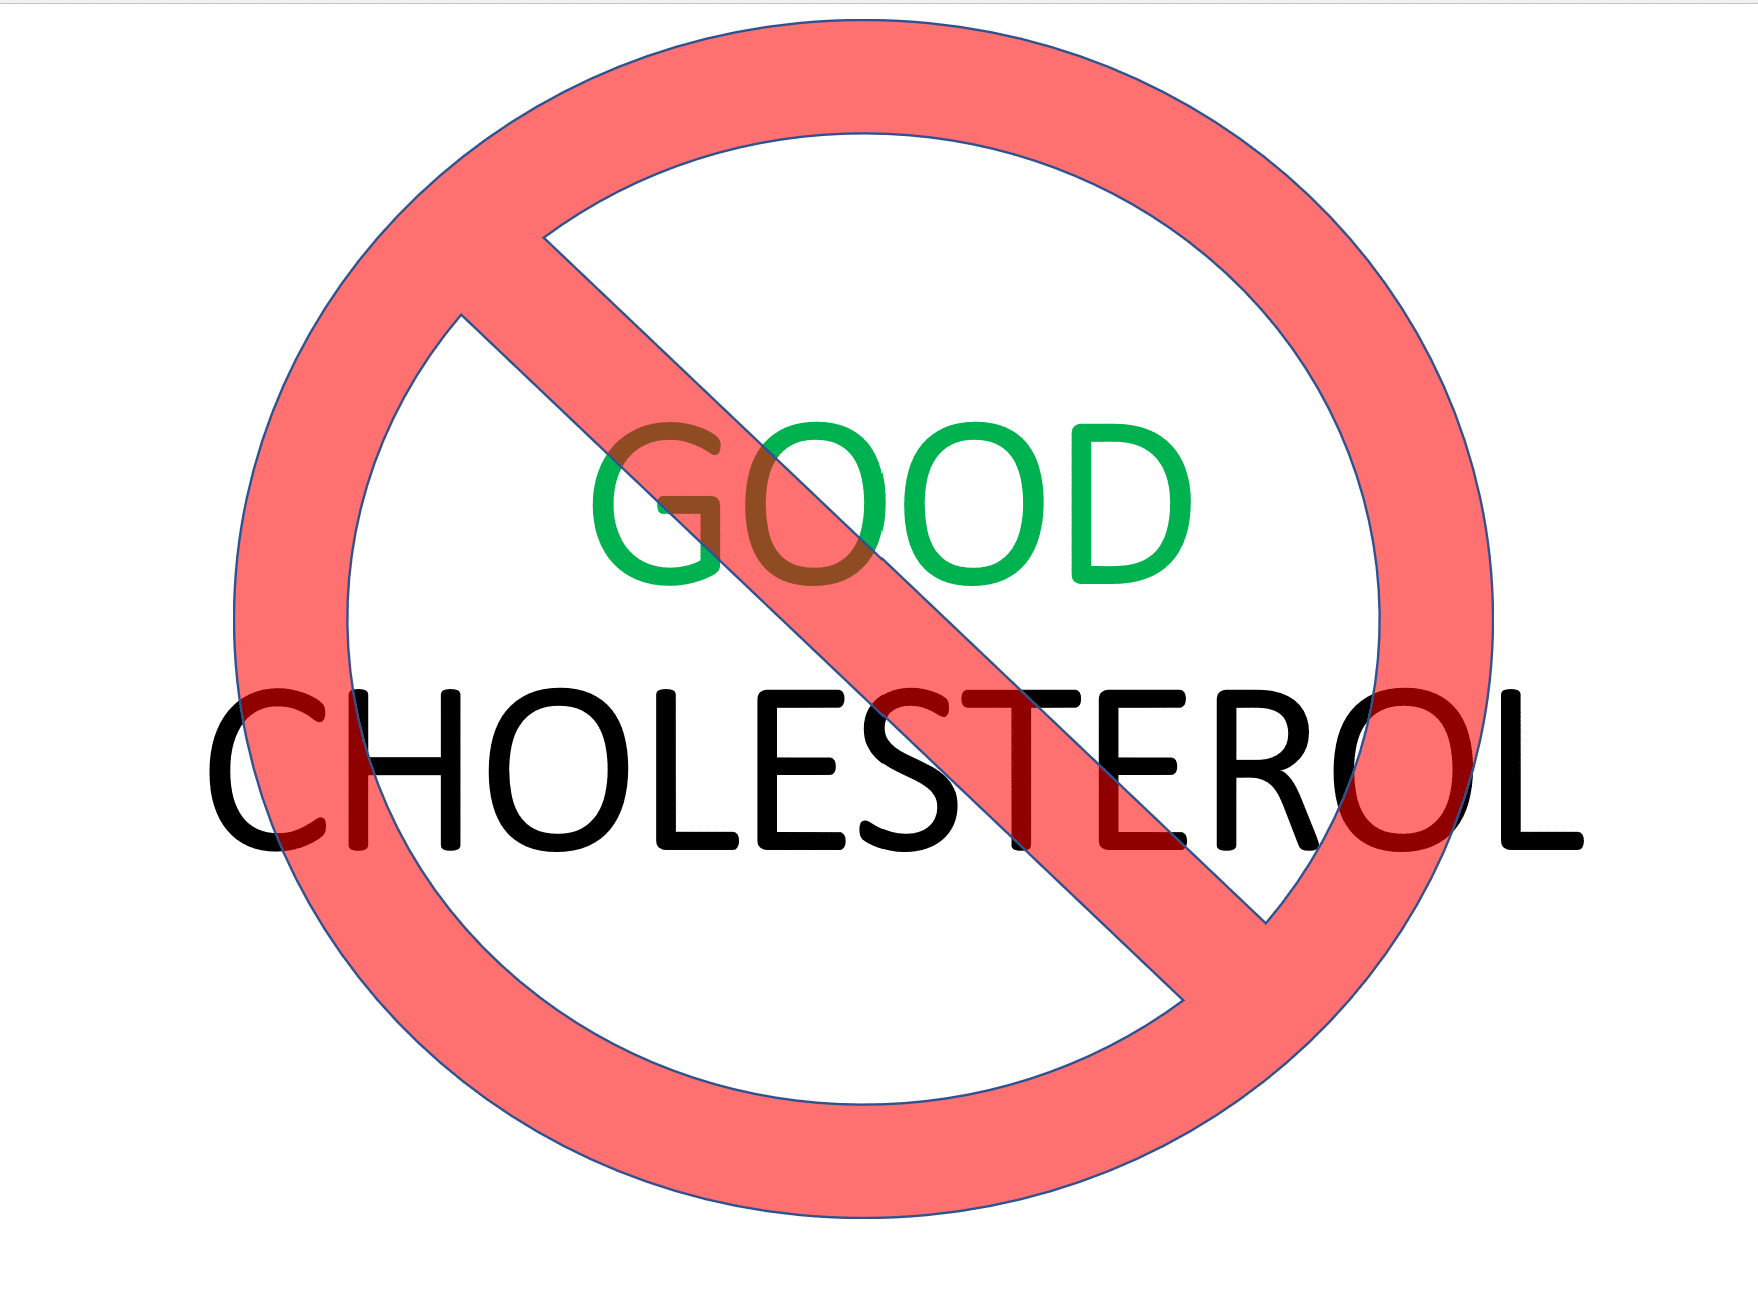 No good cholesterol